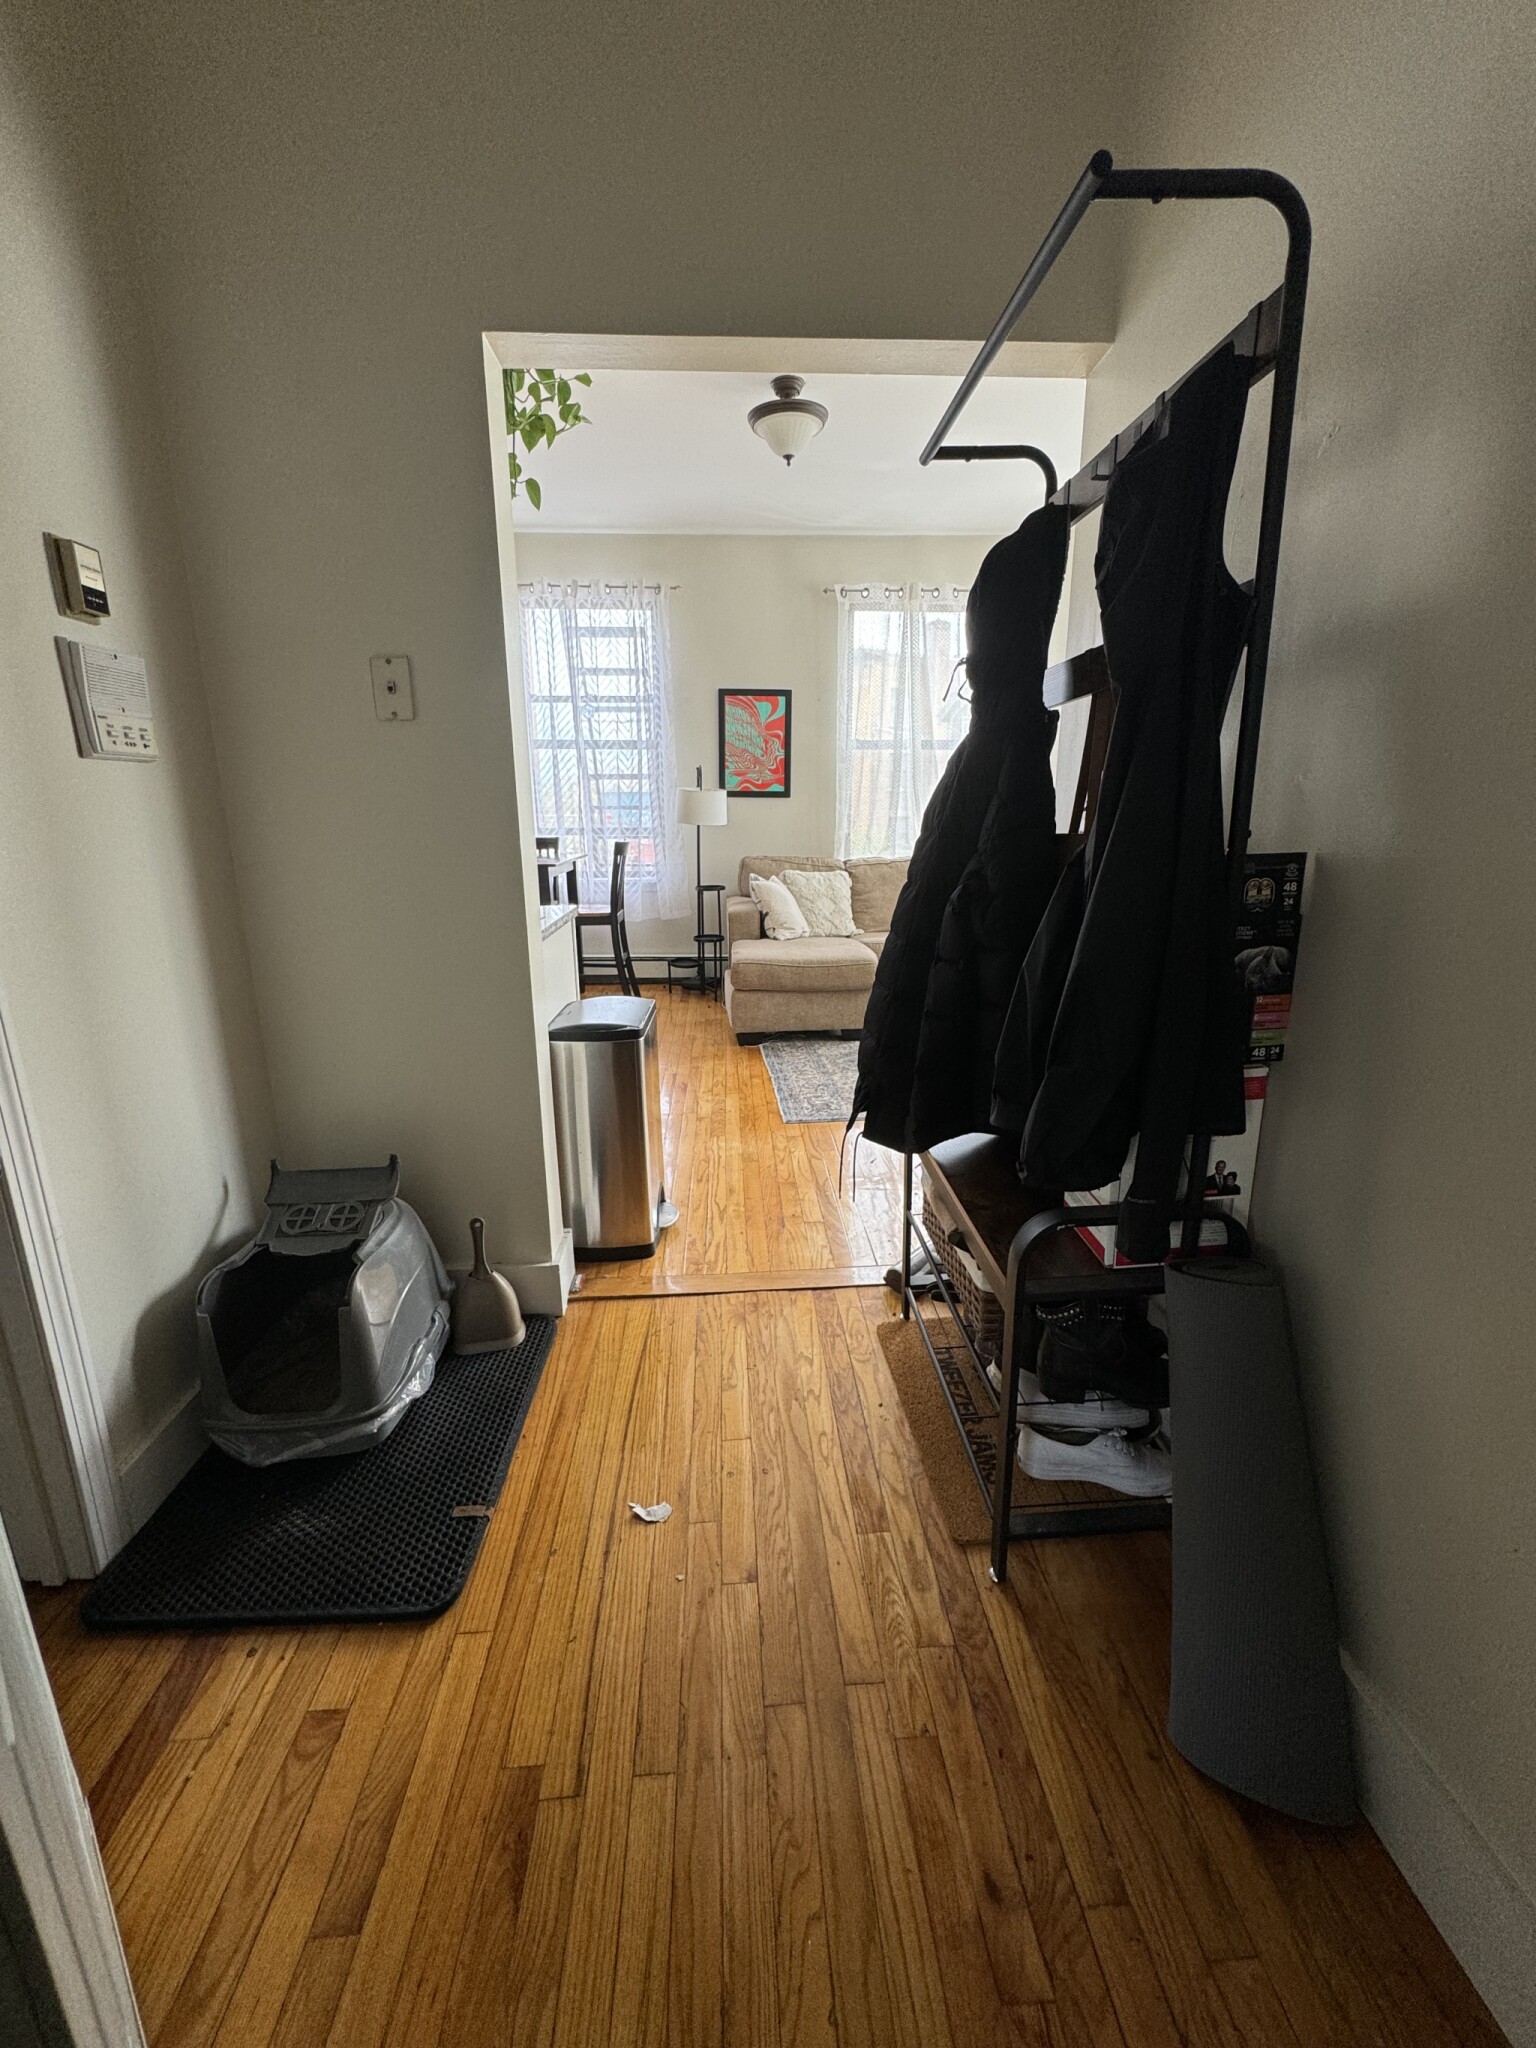 Photos of apartment on Lakeville Rd.,Boston MA 02130